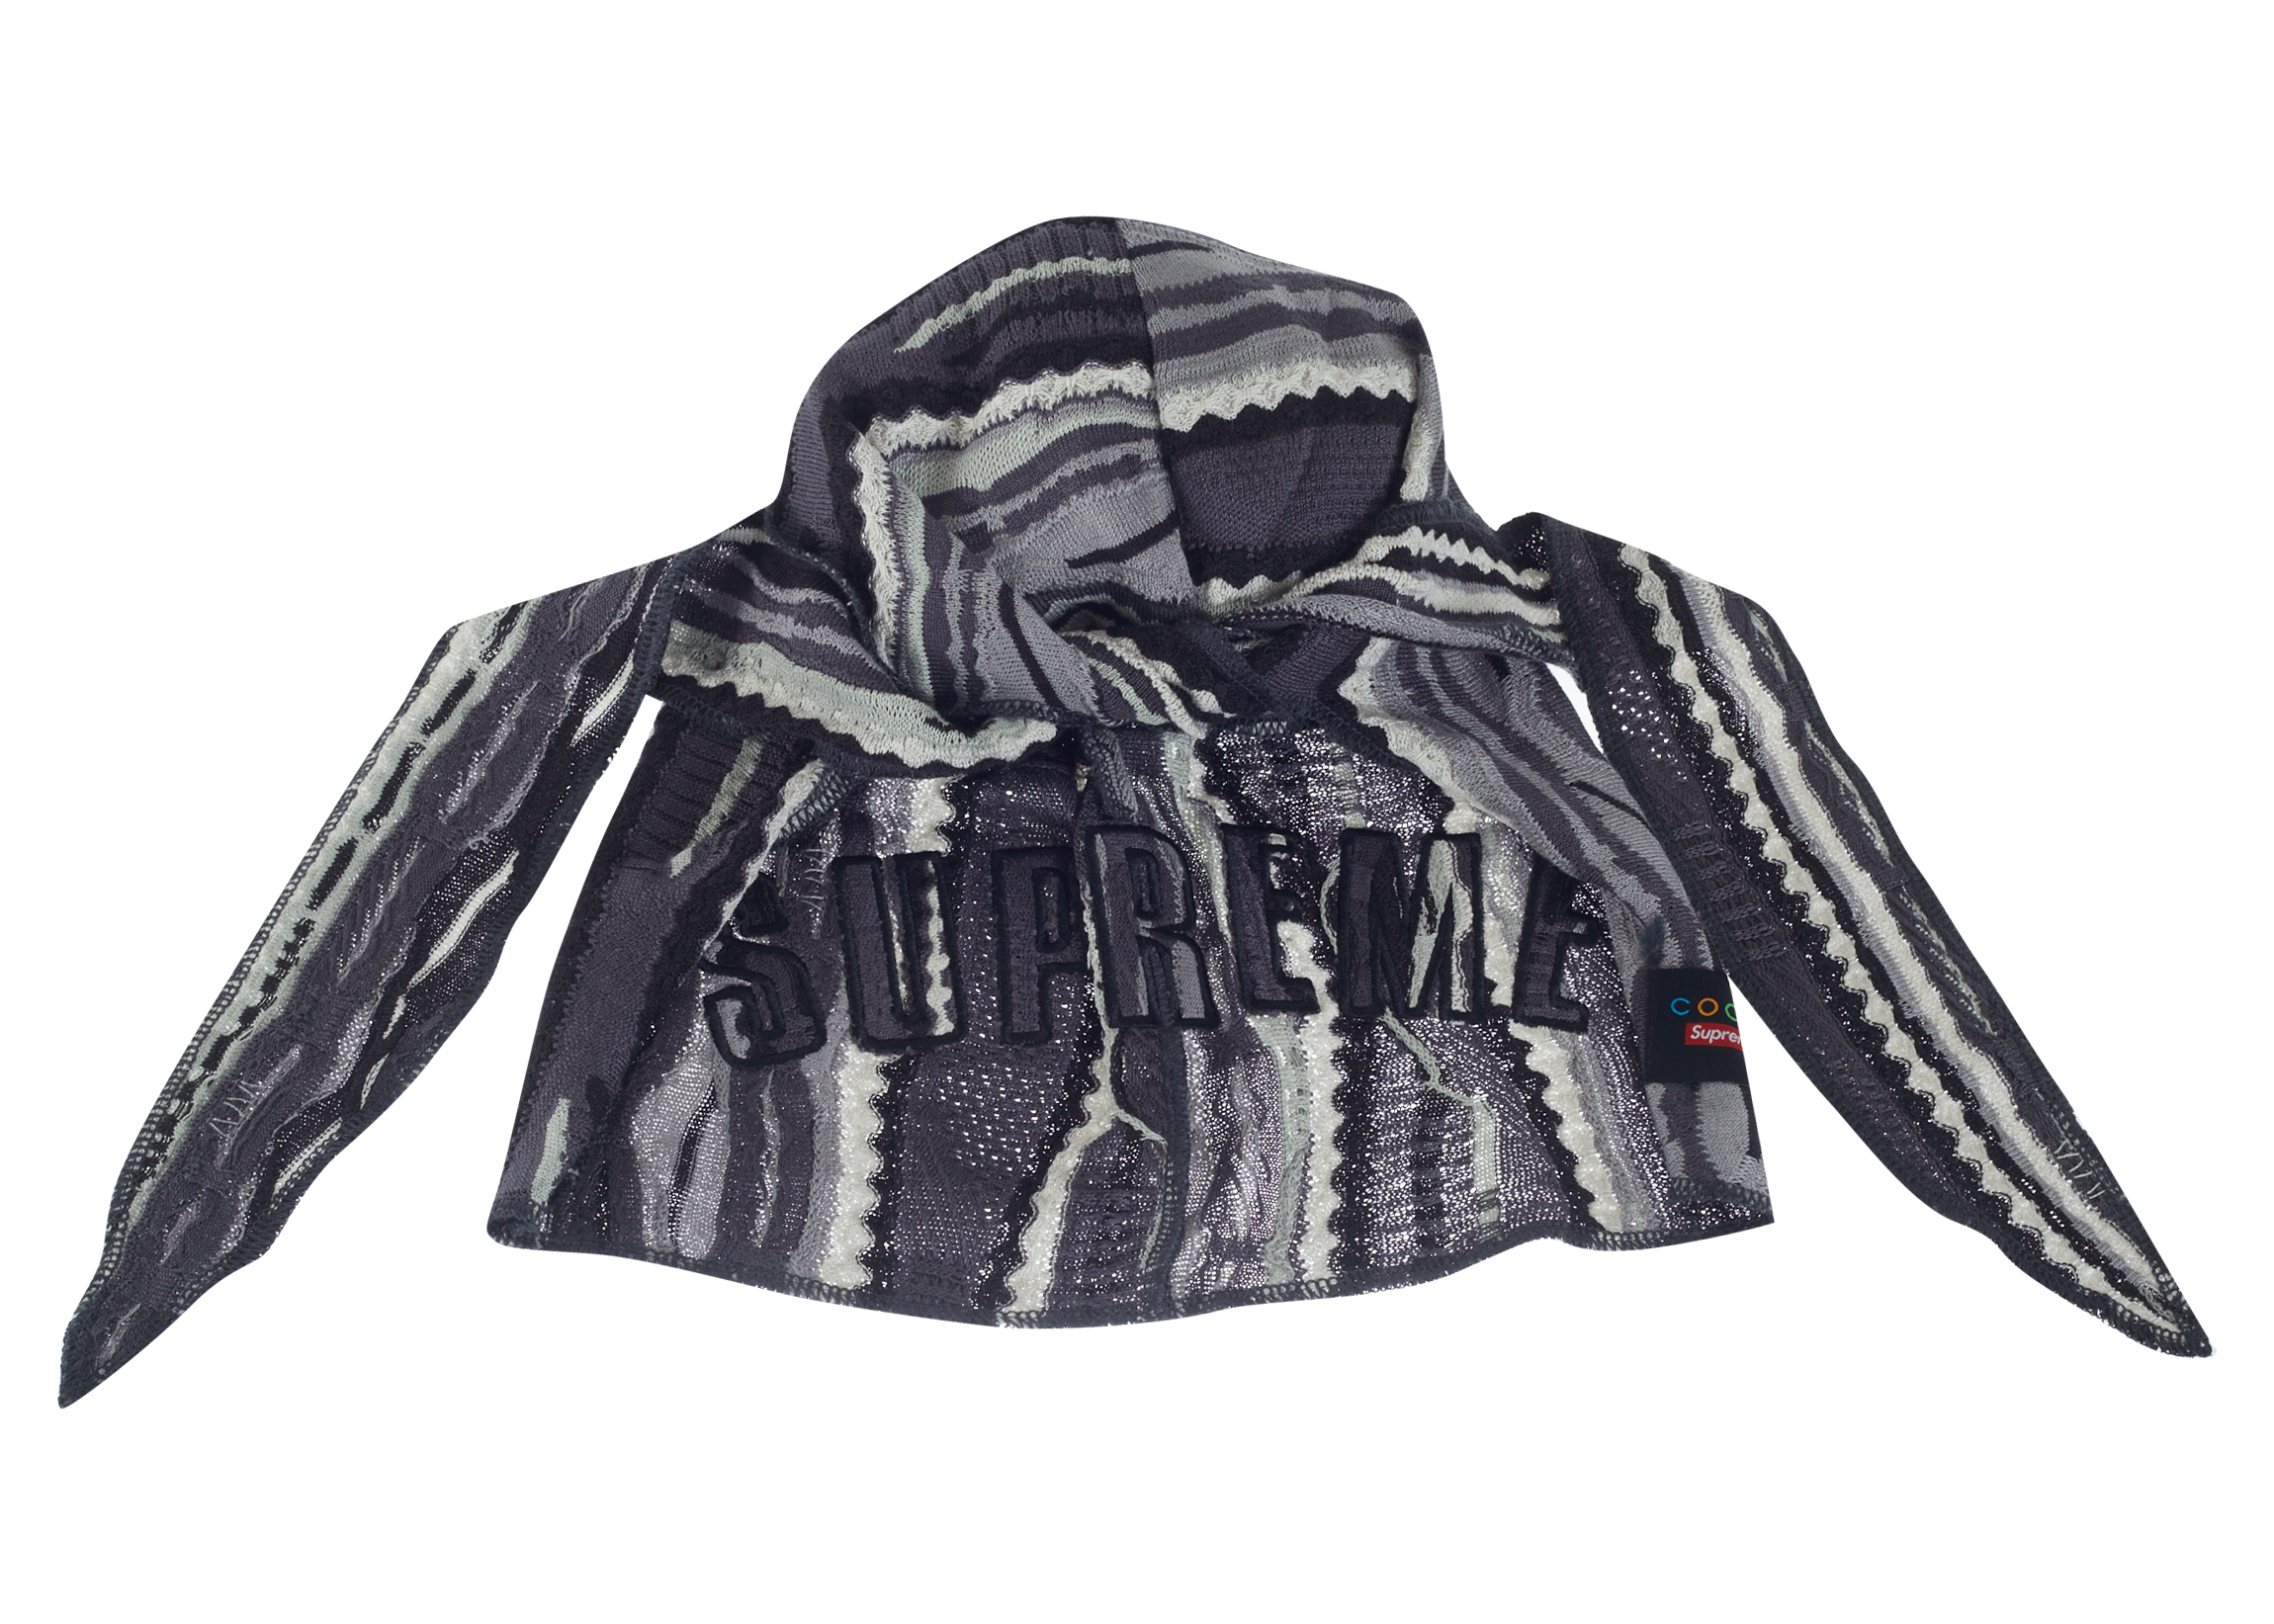 Need that jacket, BADLY! #supreme #fashion #coogi #style #streetwear #